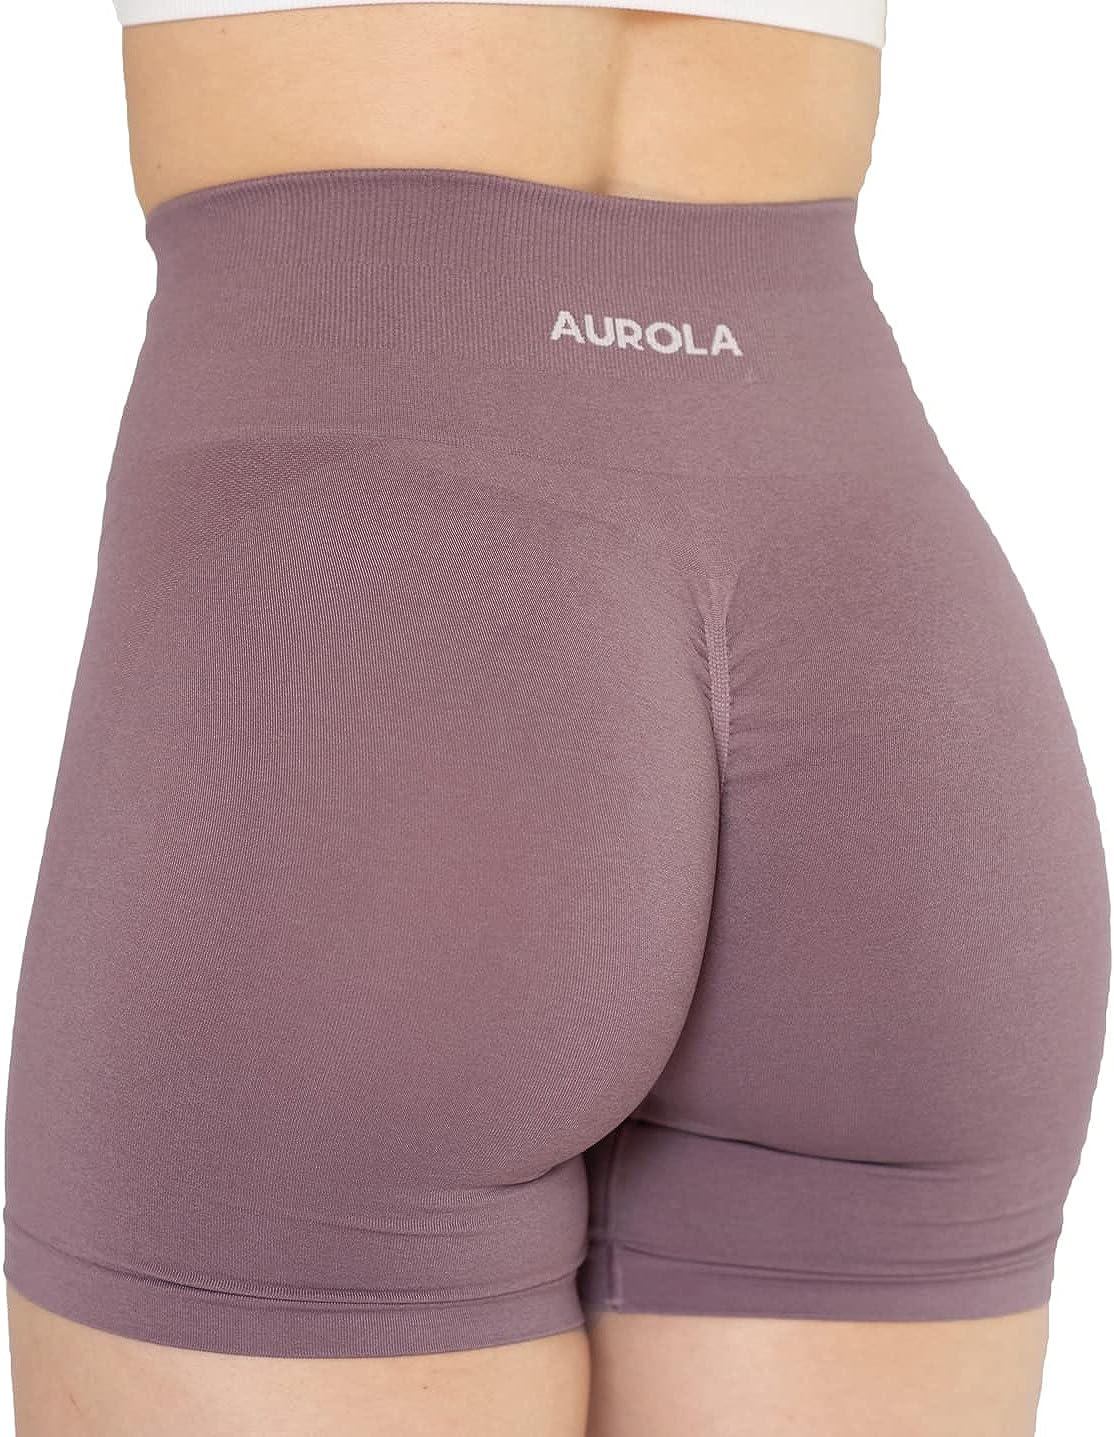 Aurola Gym Shortswomen's High Waist Yoga Shorts - Buttery Soft